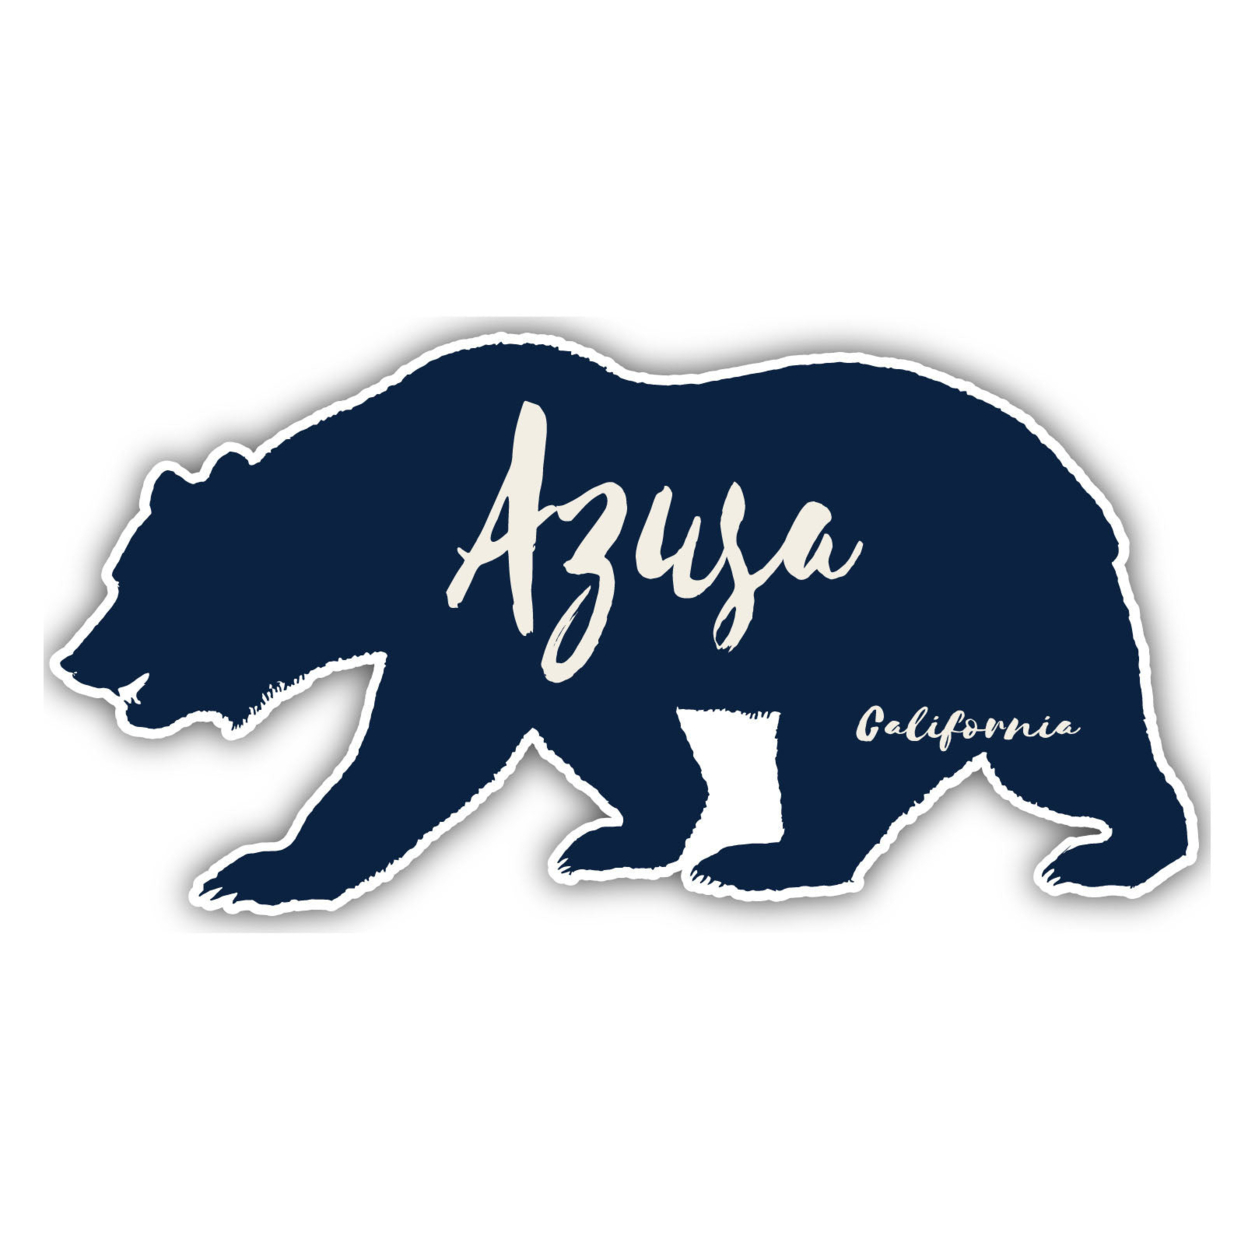 Azusa California Souvenir Decorative Stickers (Choose Theme And Size) - 4-Pack, 12-Inch, Bear